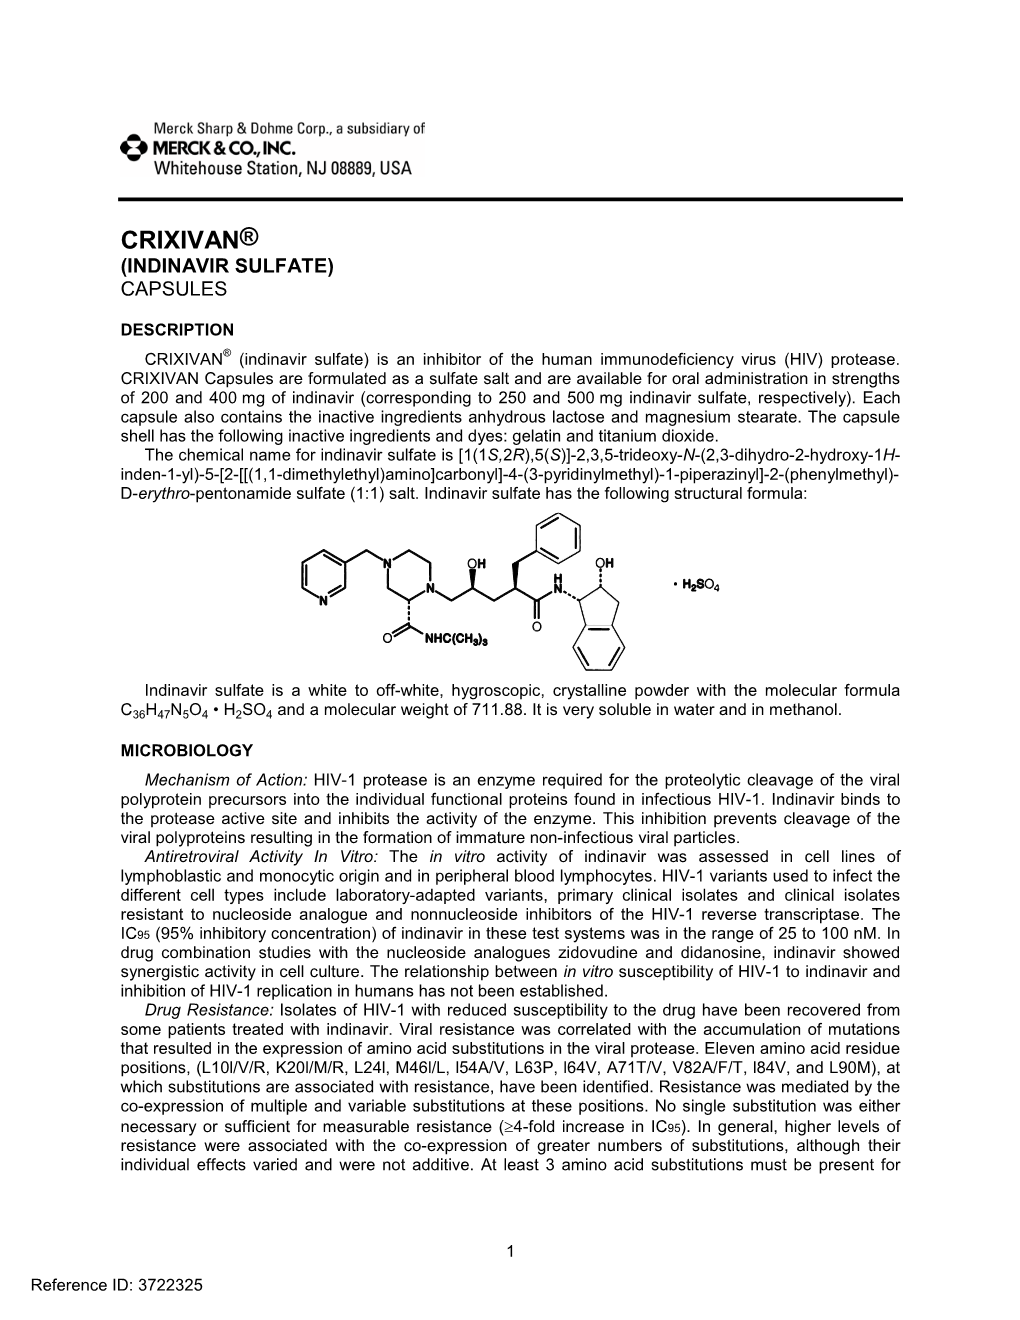 Crixivan® (Indinavir Sulfate) Capsules